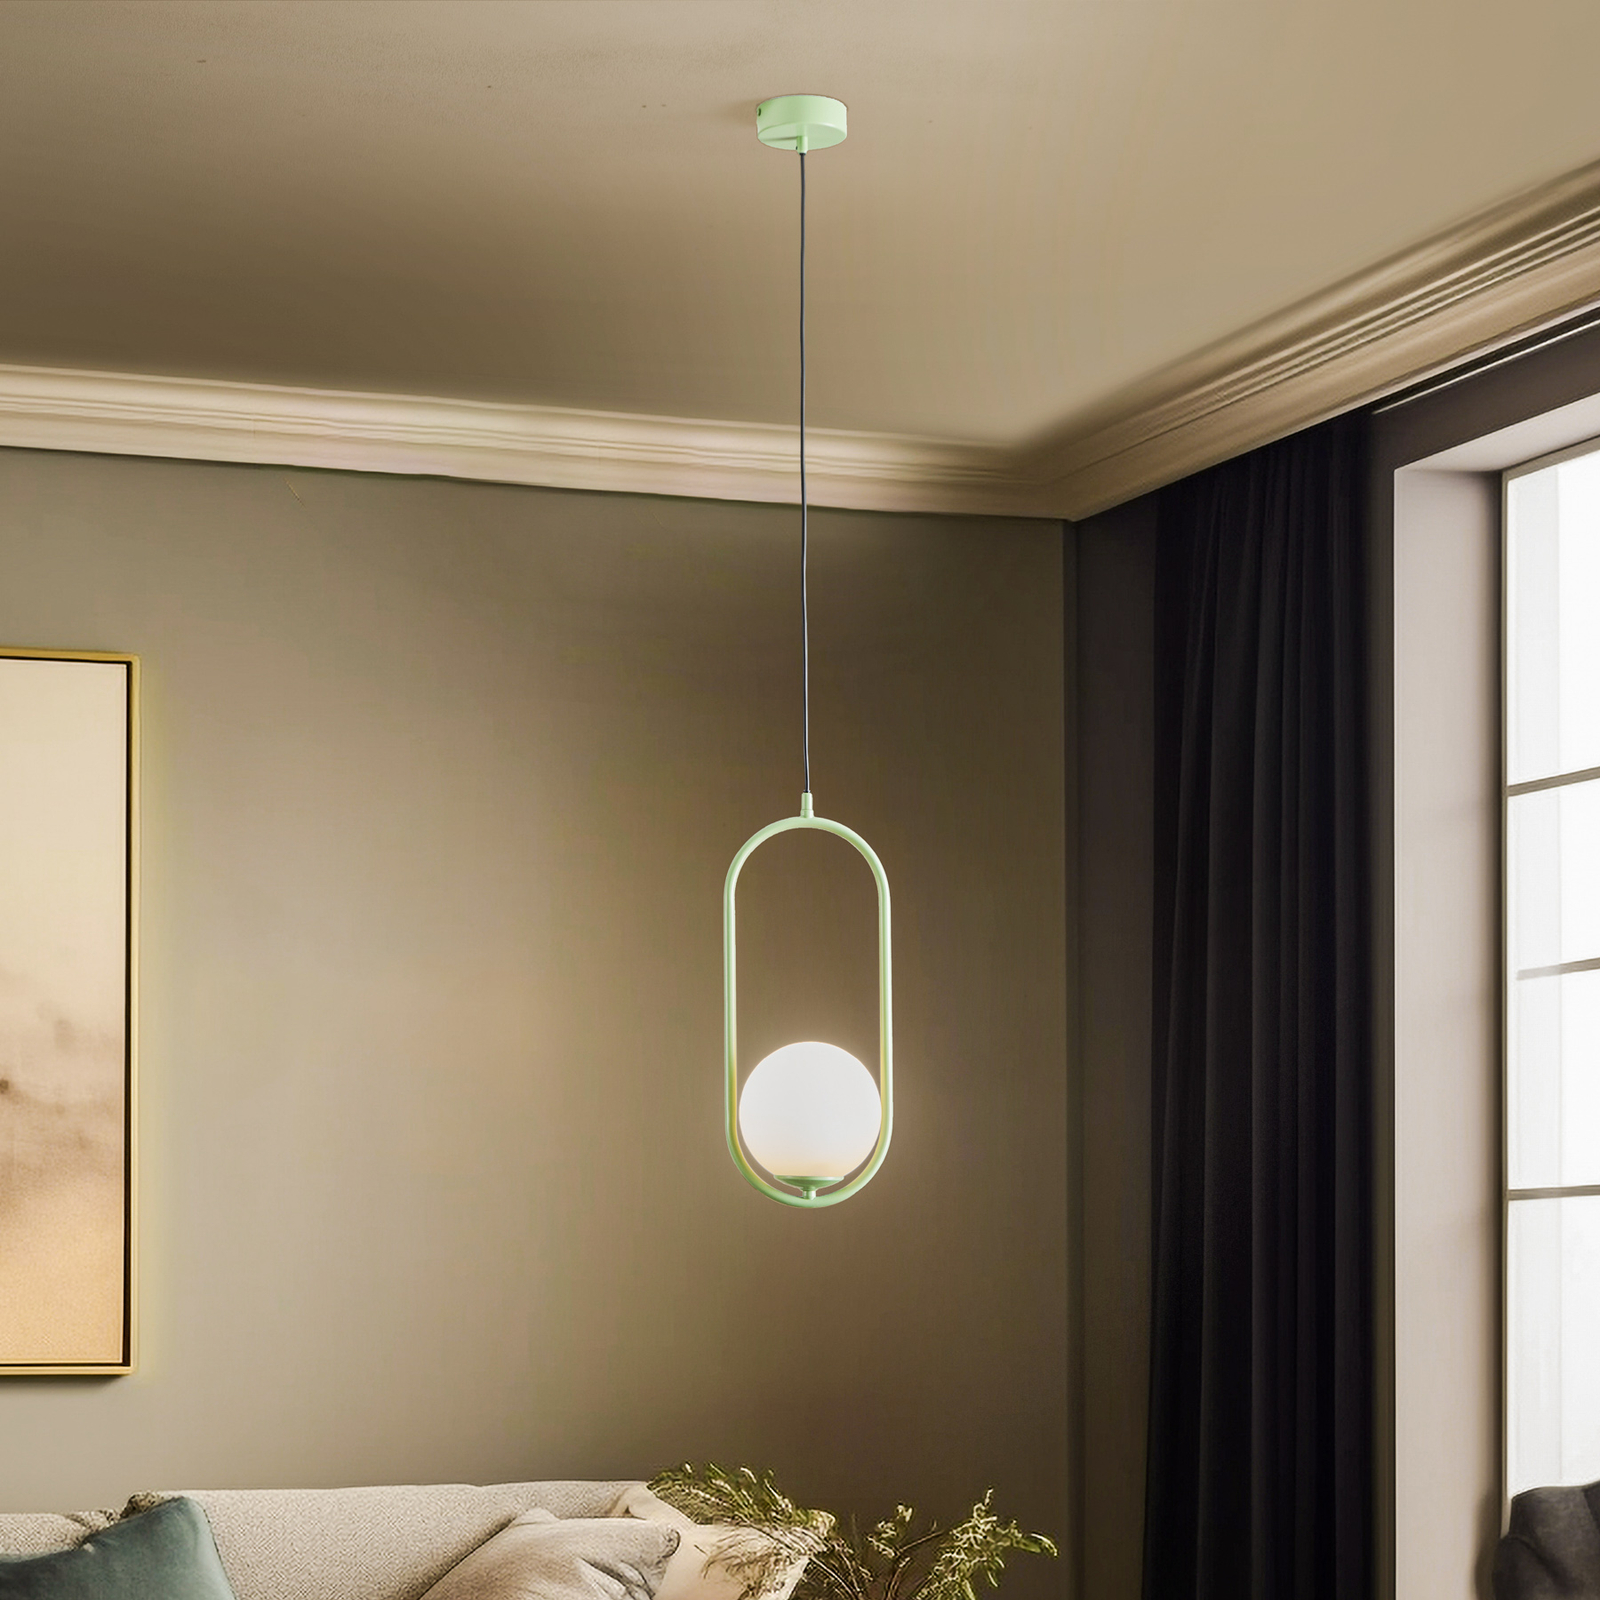 Samba pendant light, 1-bulb, green/white